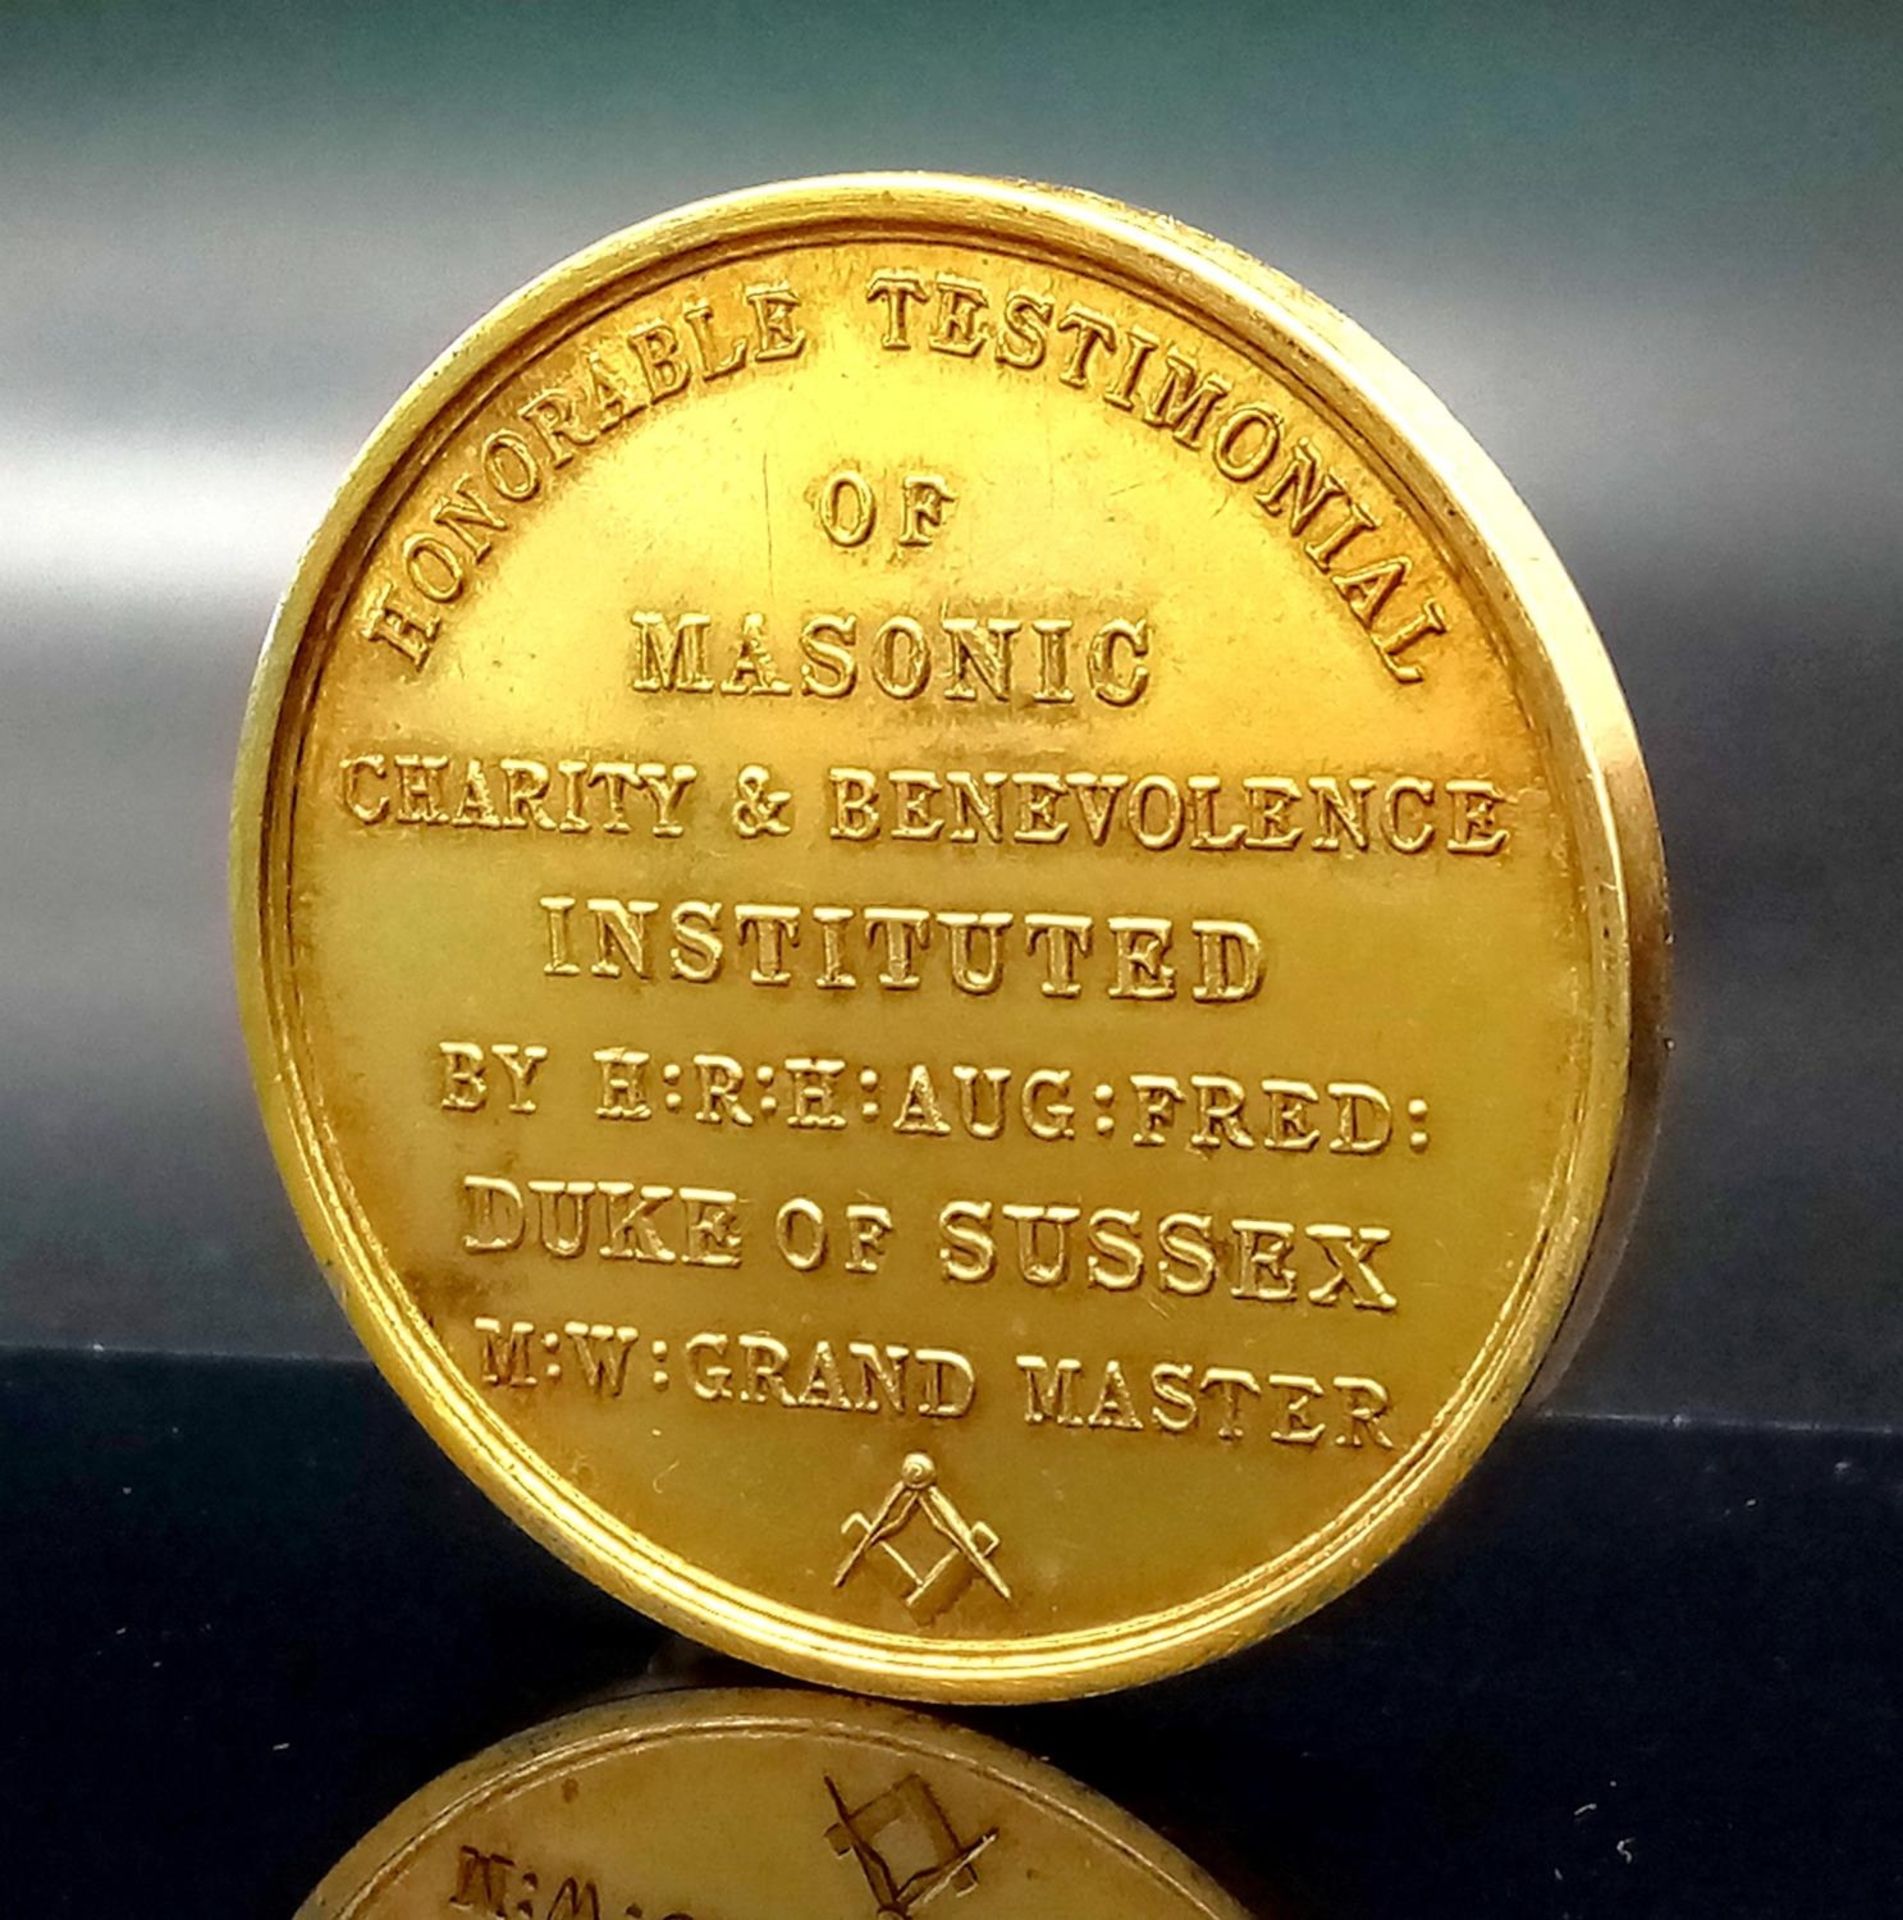 A Gold Plated Masonic Medal/Medallion - 35mm diameter.